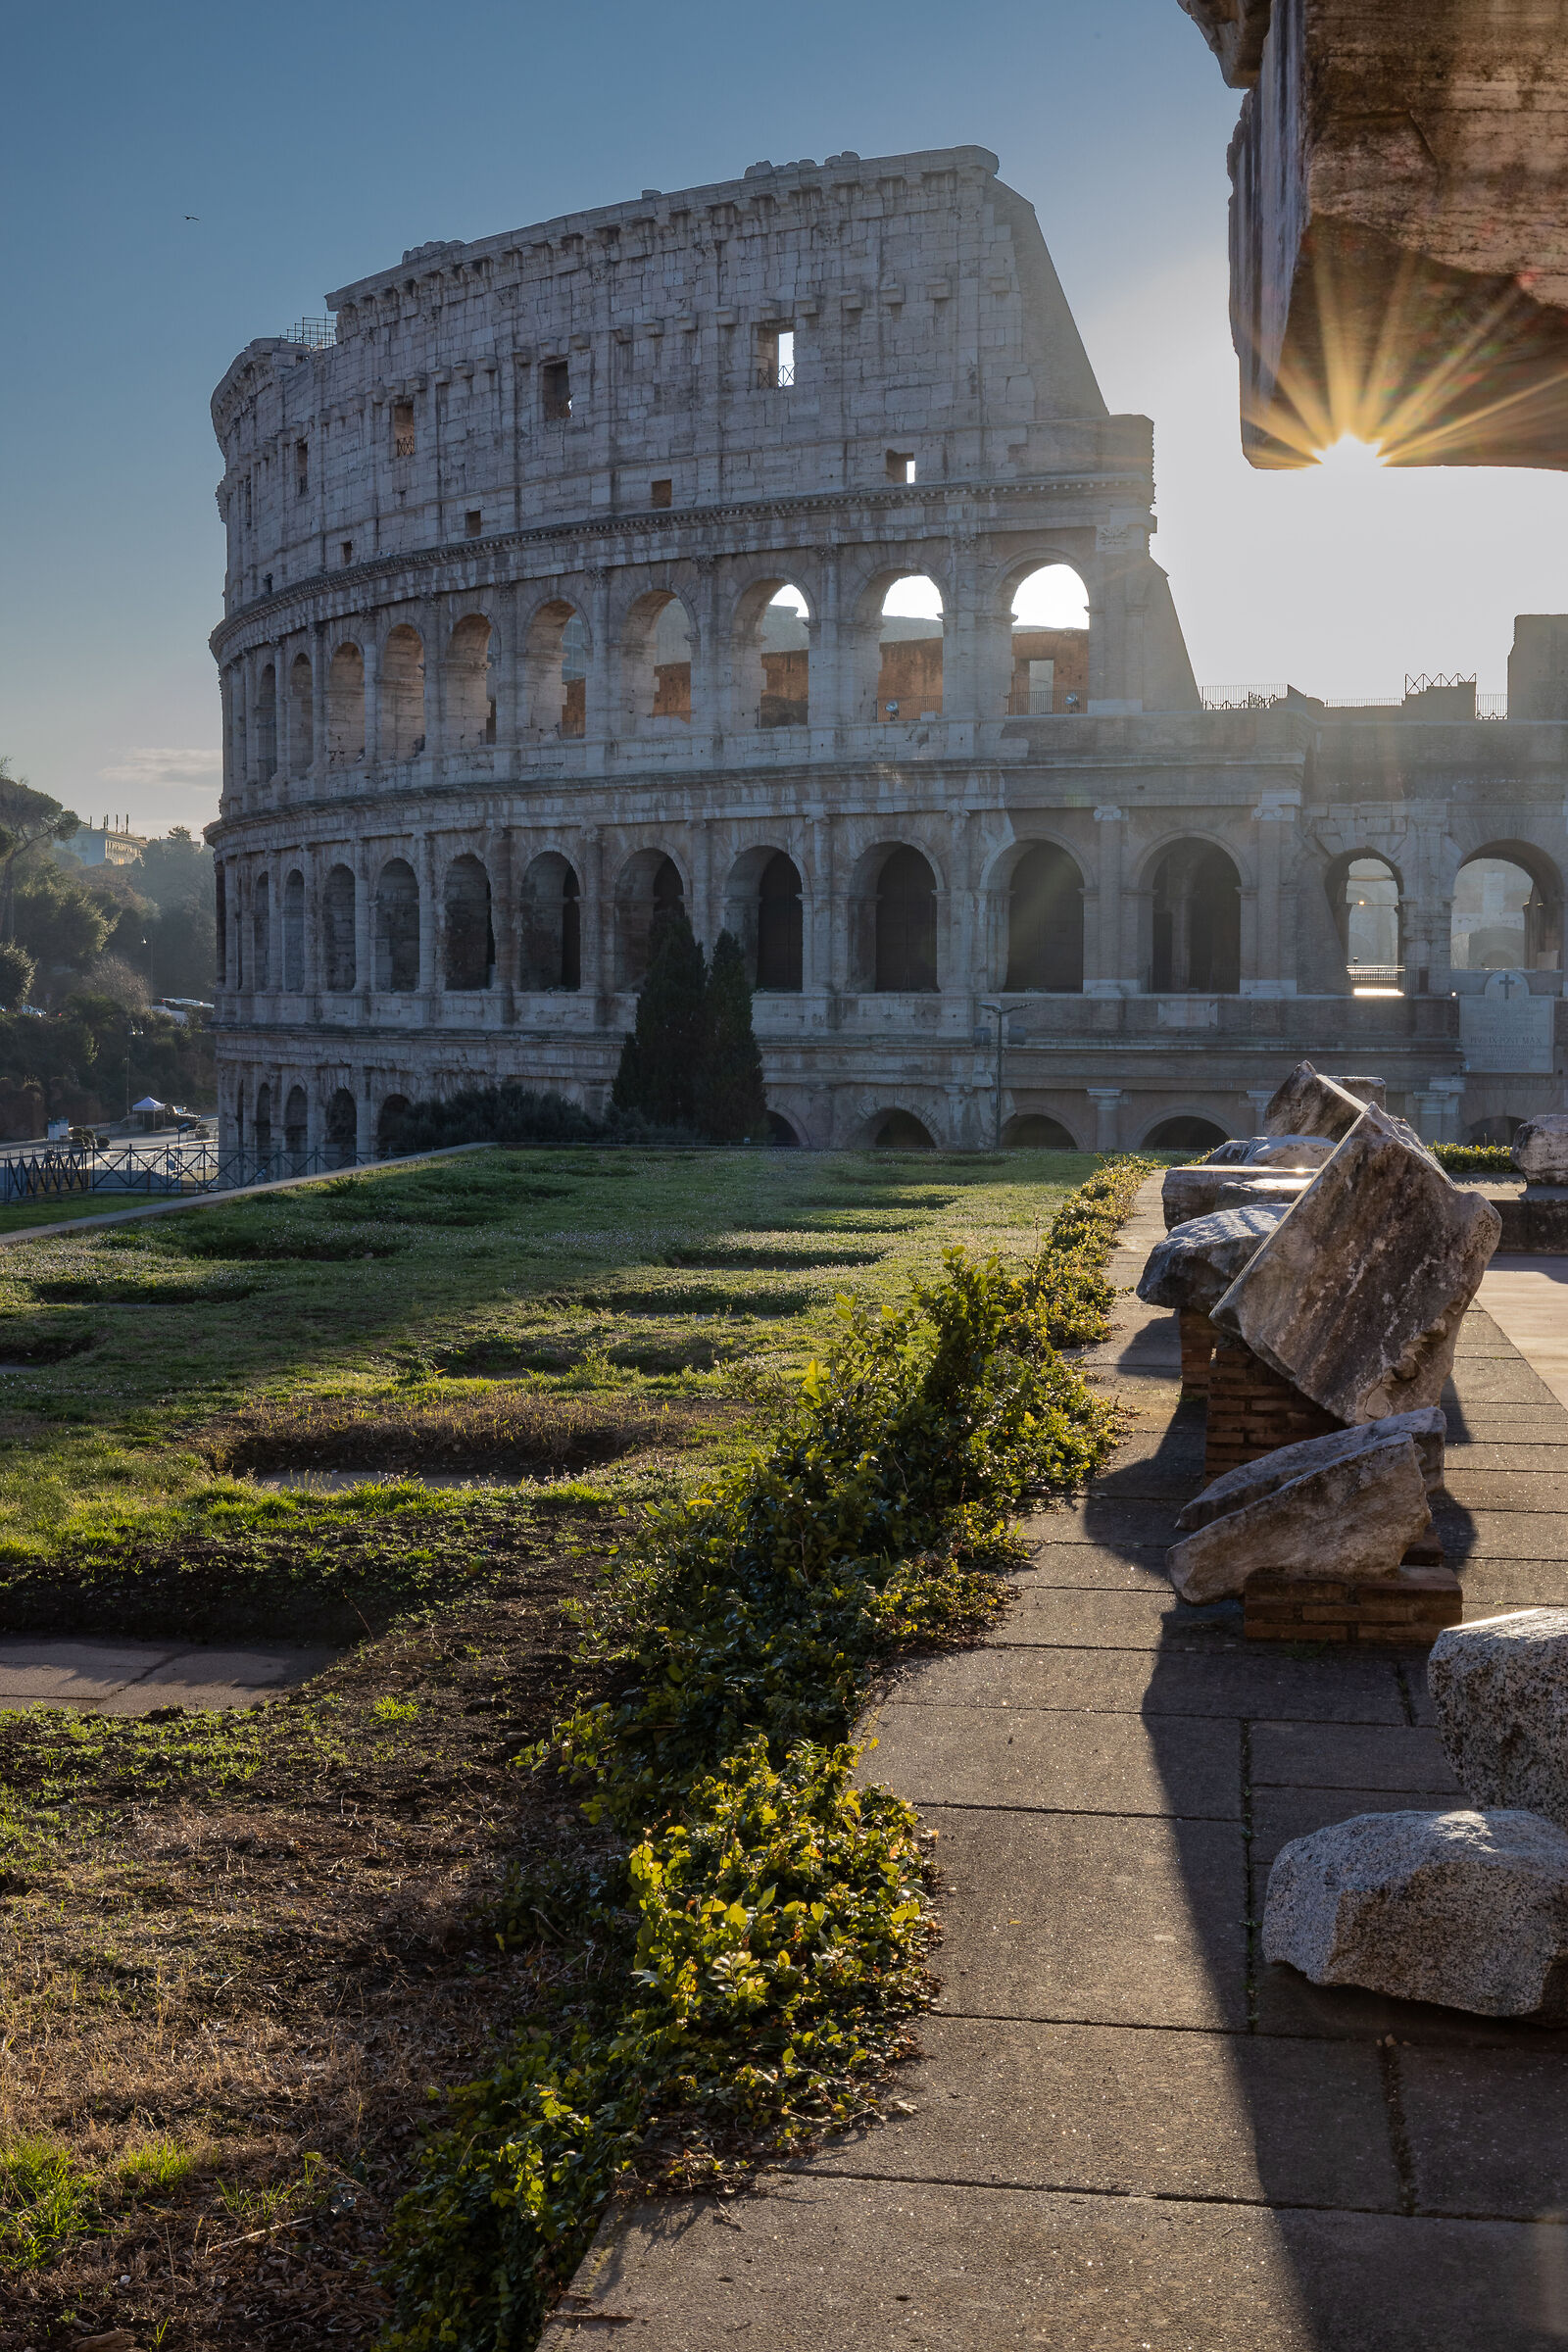 Sunrise over the Colosseum...